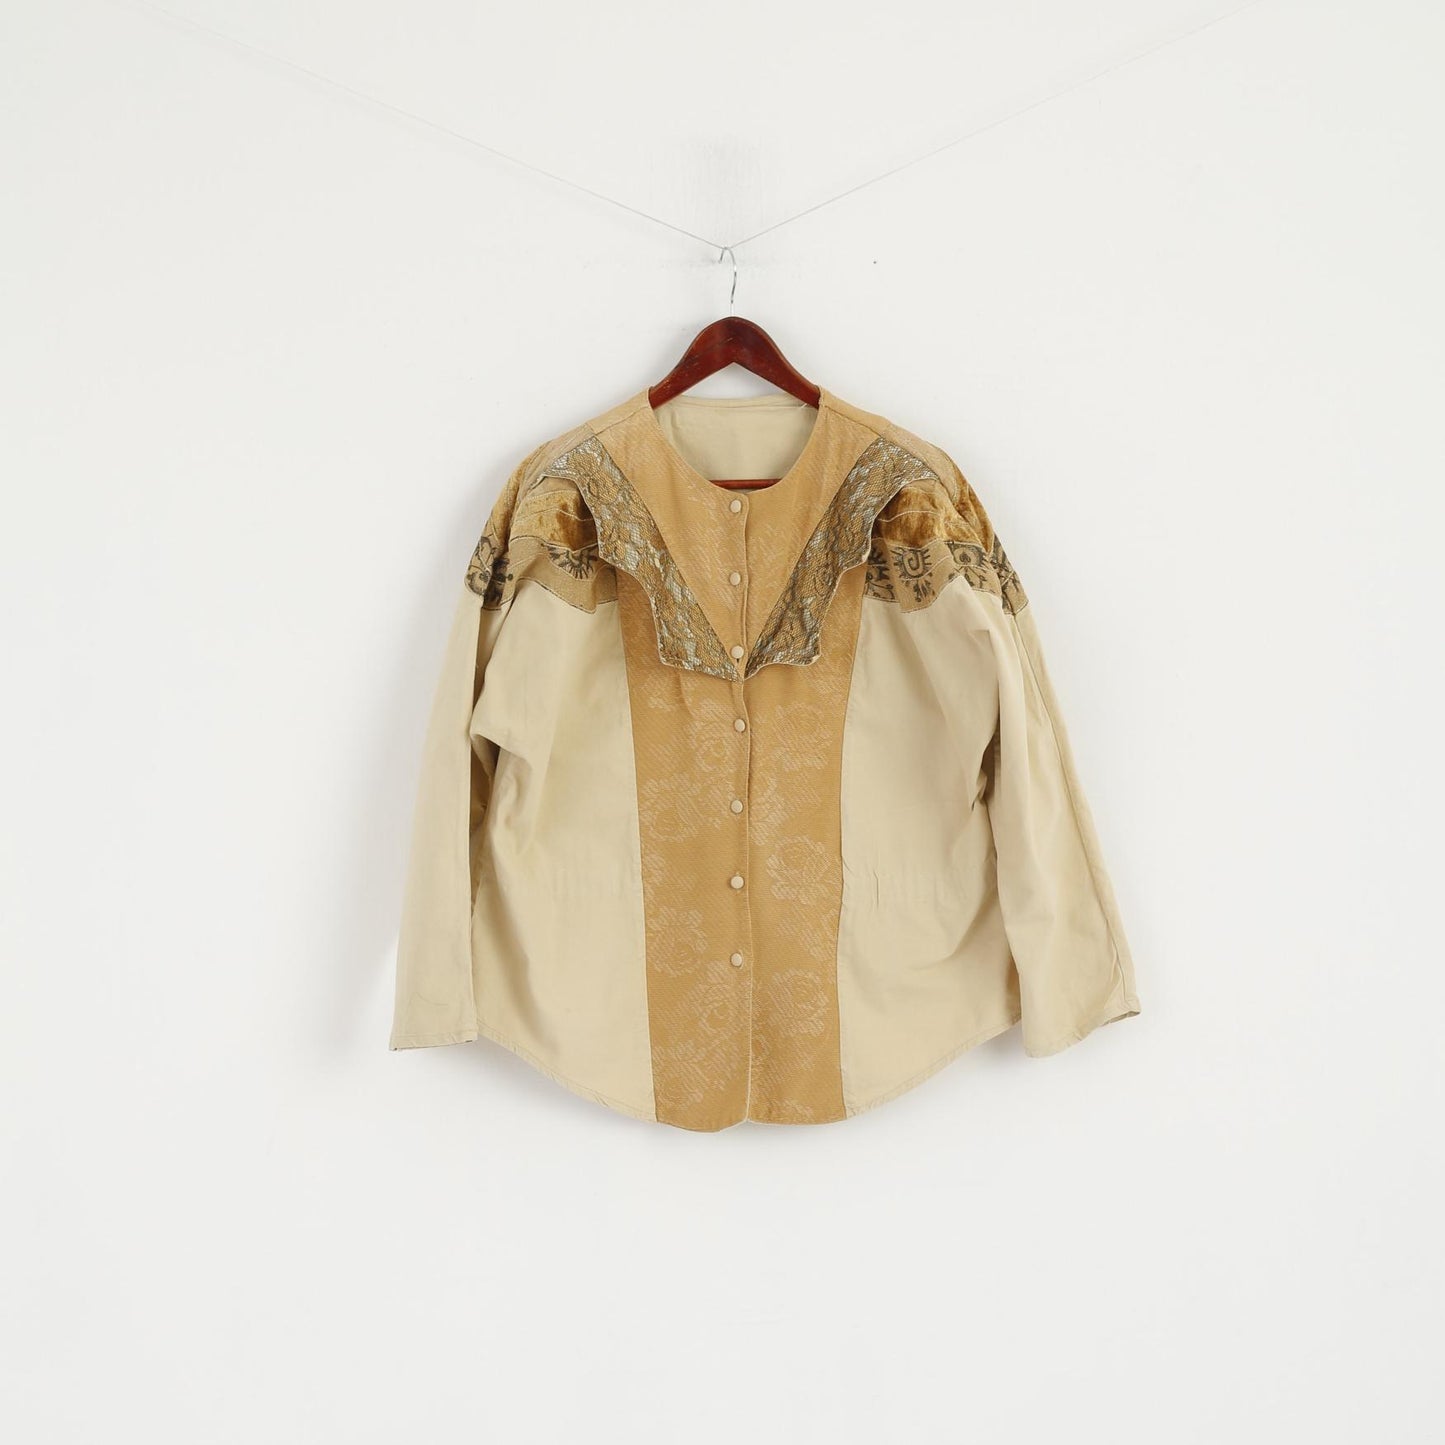 Rita Bzu Fani Women L Jacket Beige Moda Italia Vintage Bomber Buttoned Gold Top